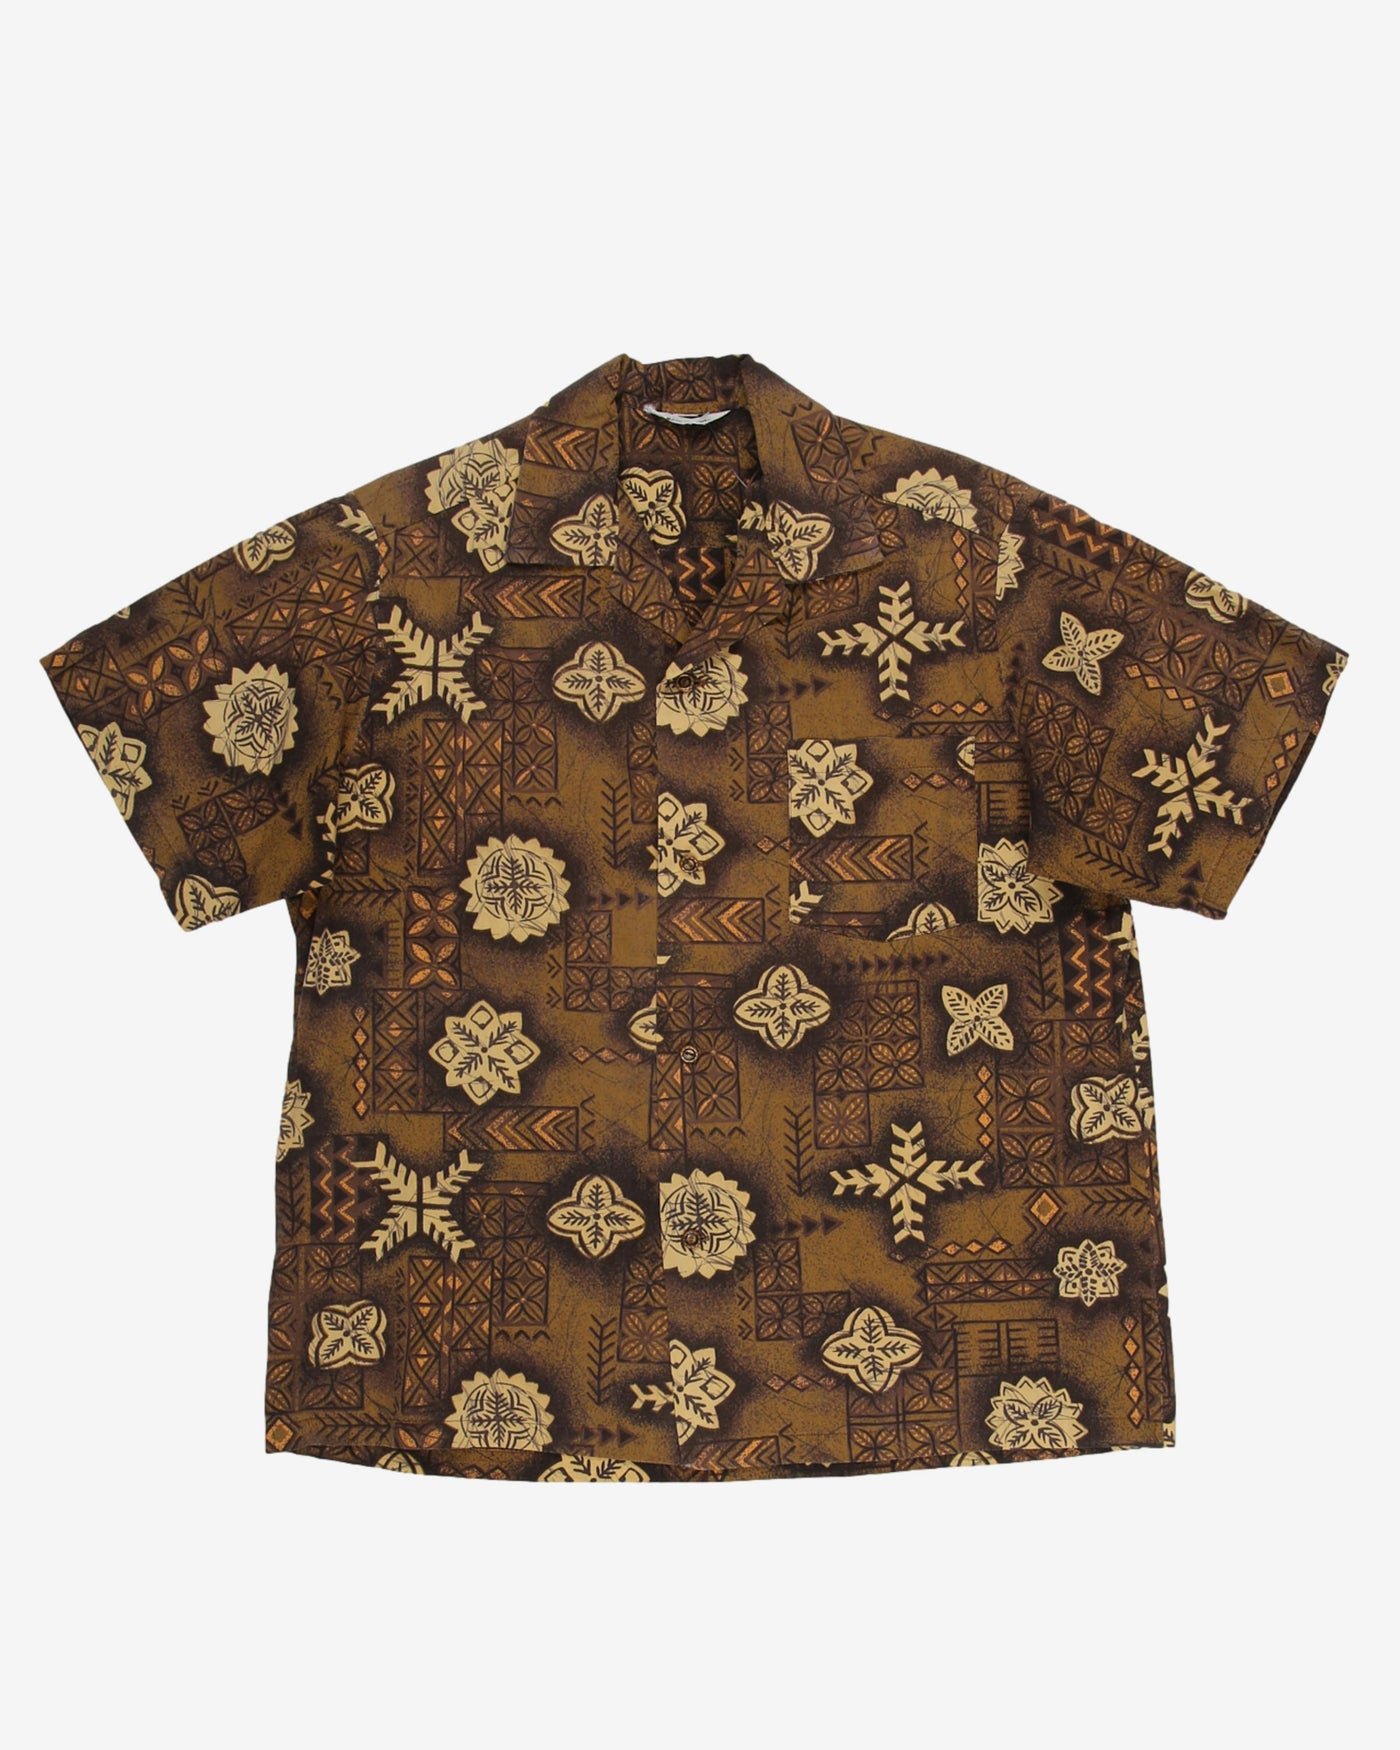 Vintage Brown Tropical All Over Print Hawaiian Shirt - L